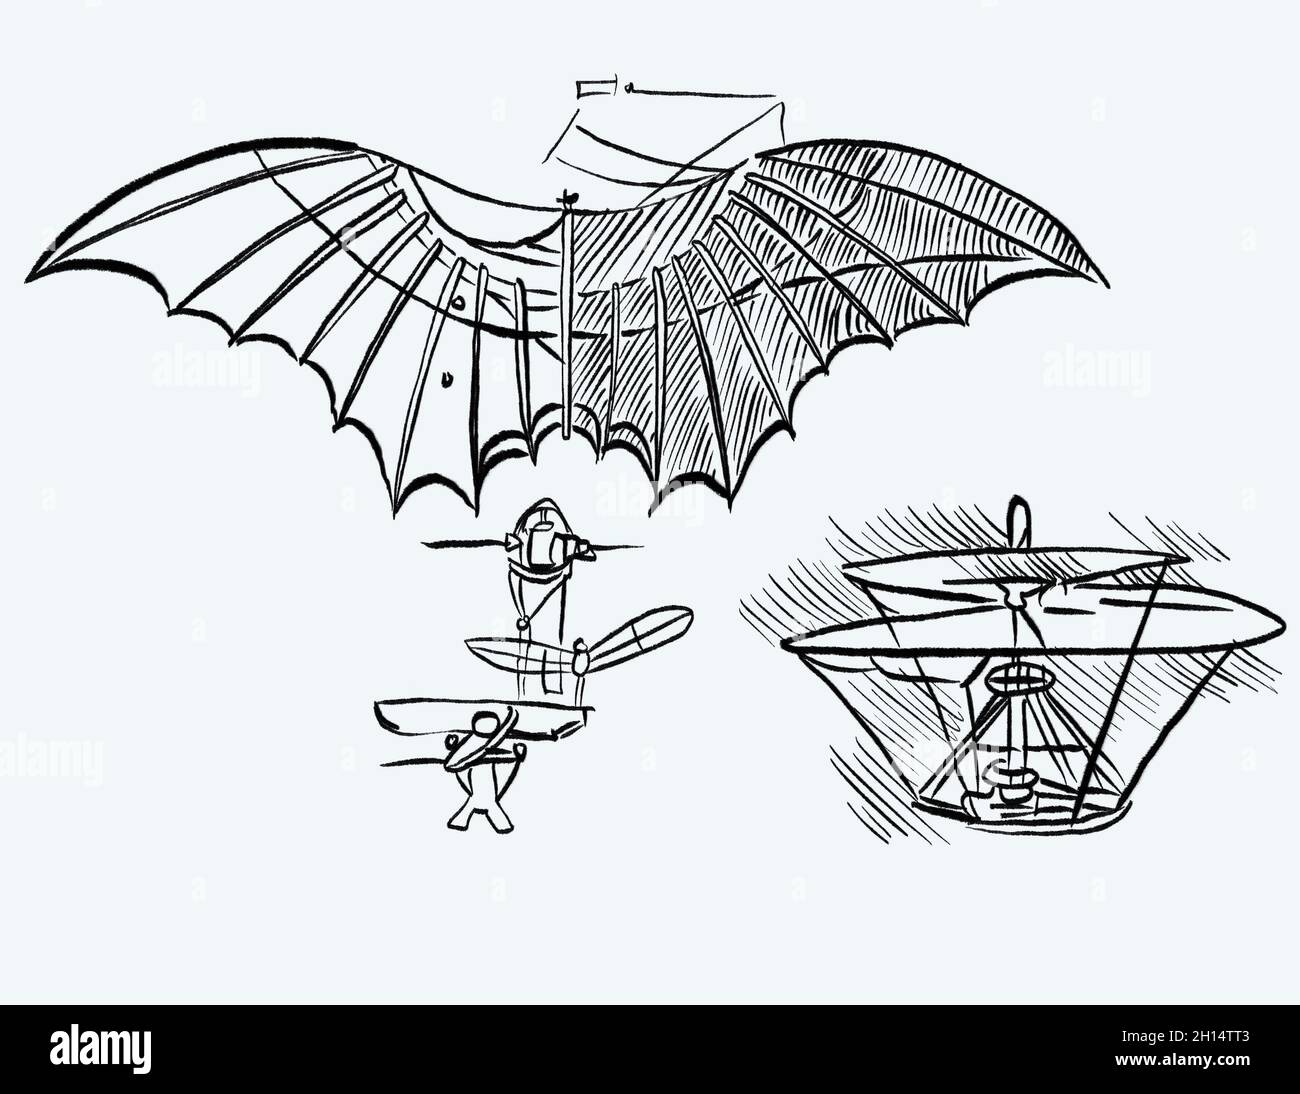 Leonardo Da Vinci's flying machine illustration Stock Photo - Alamy